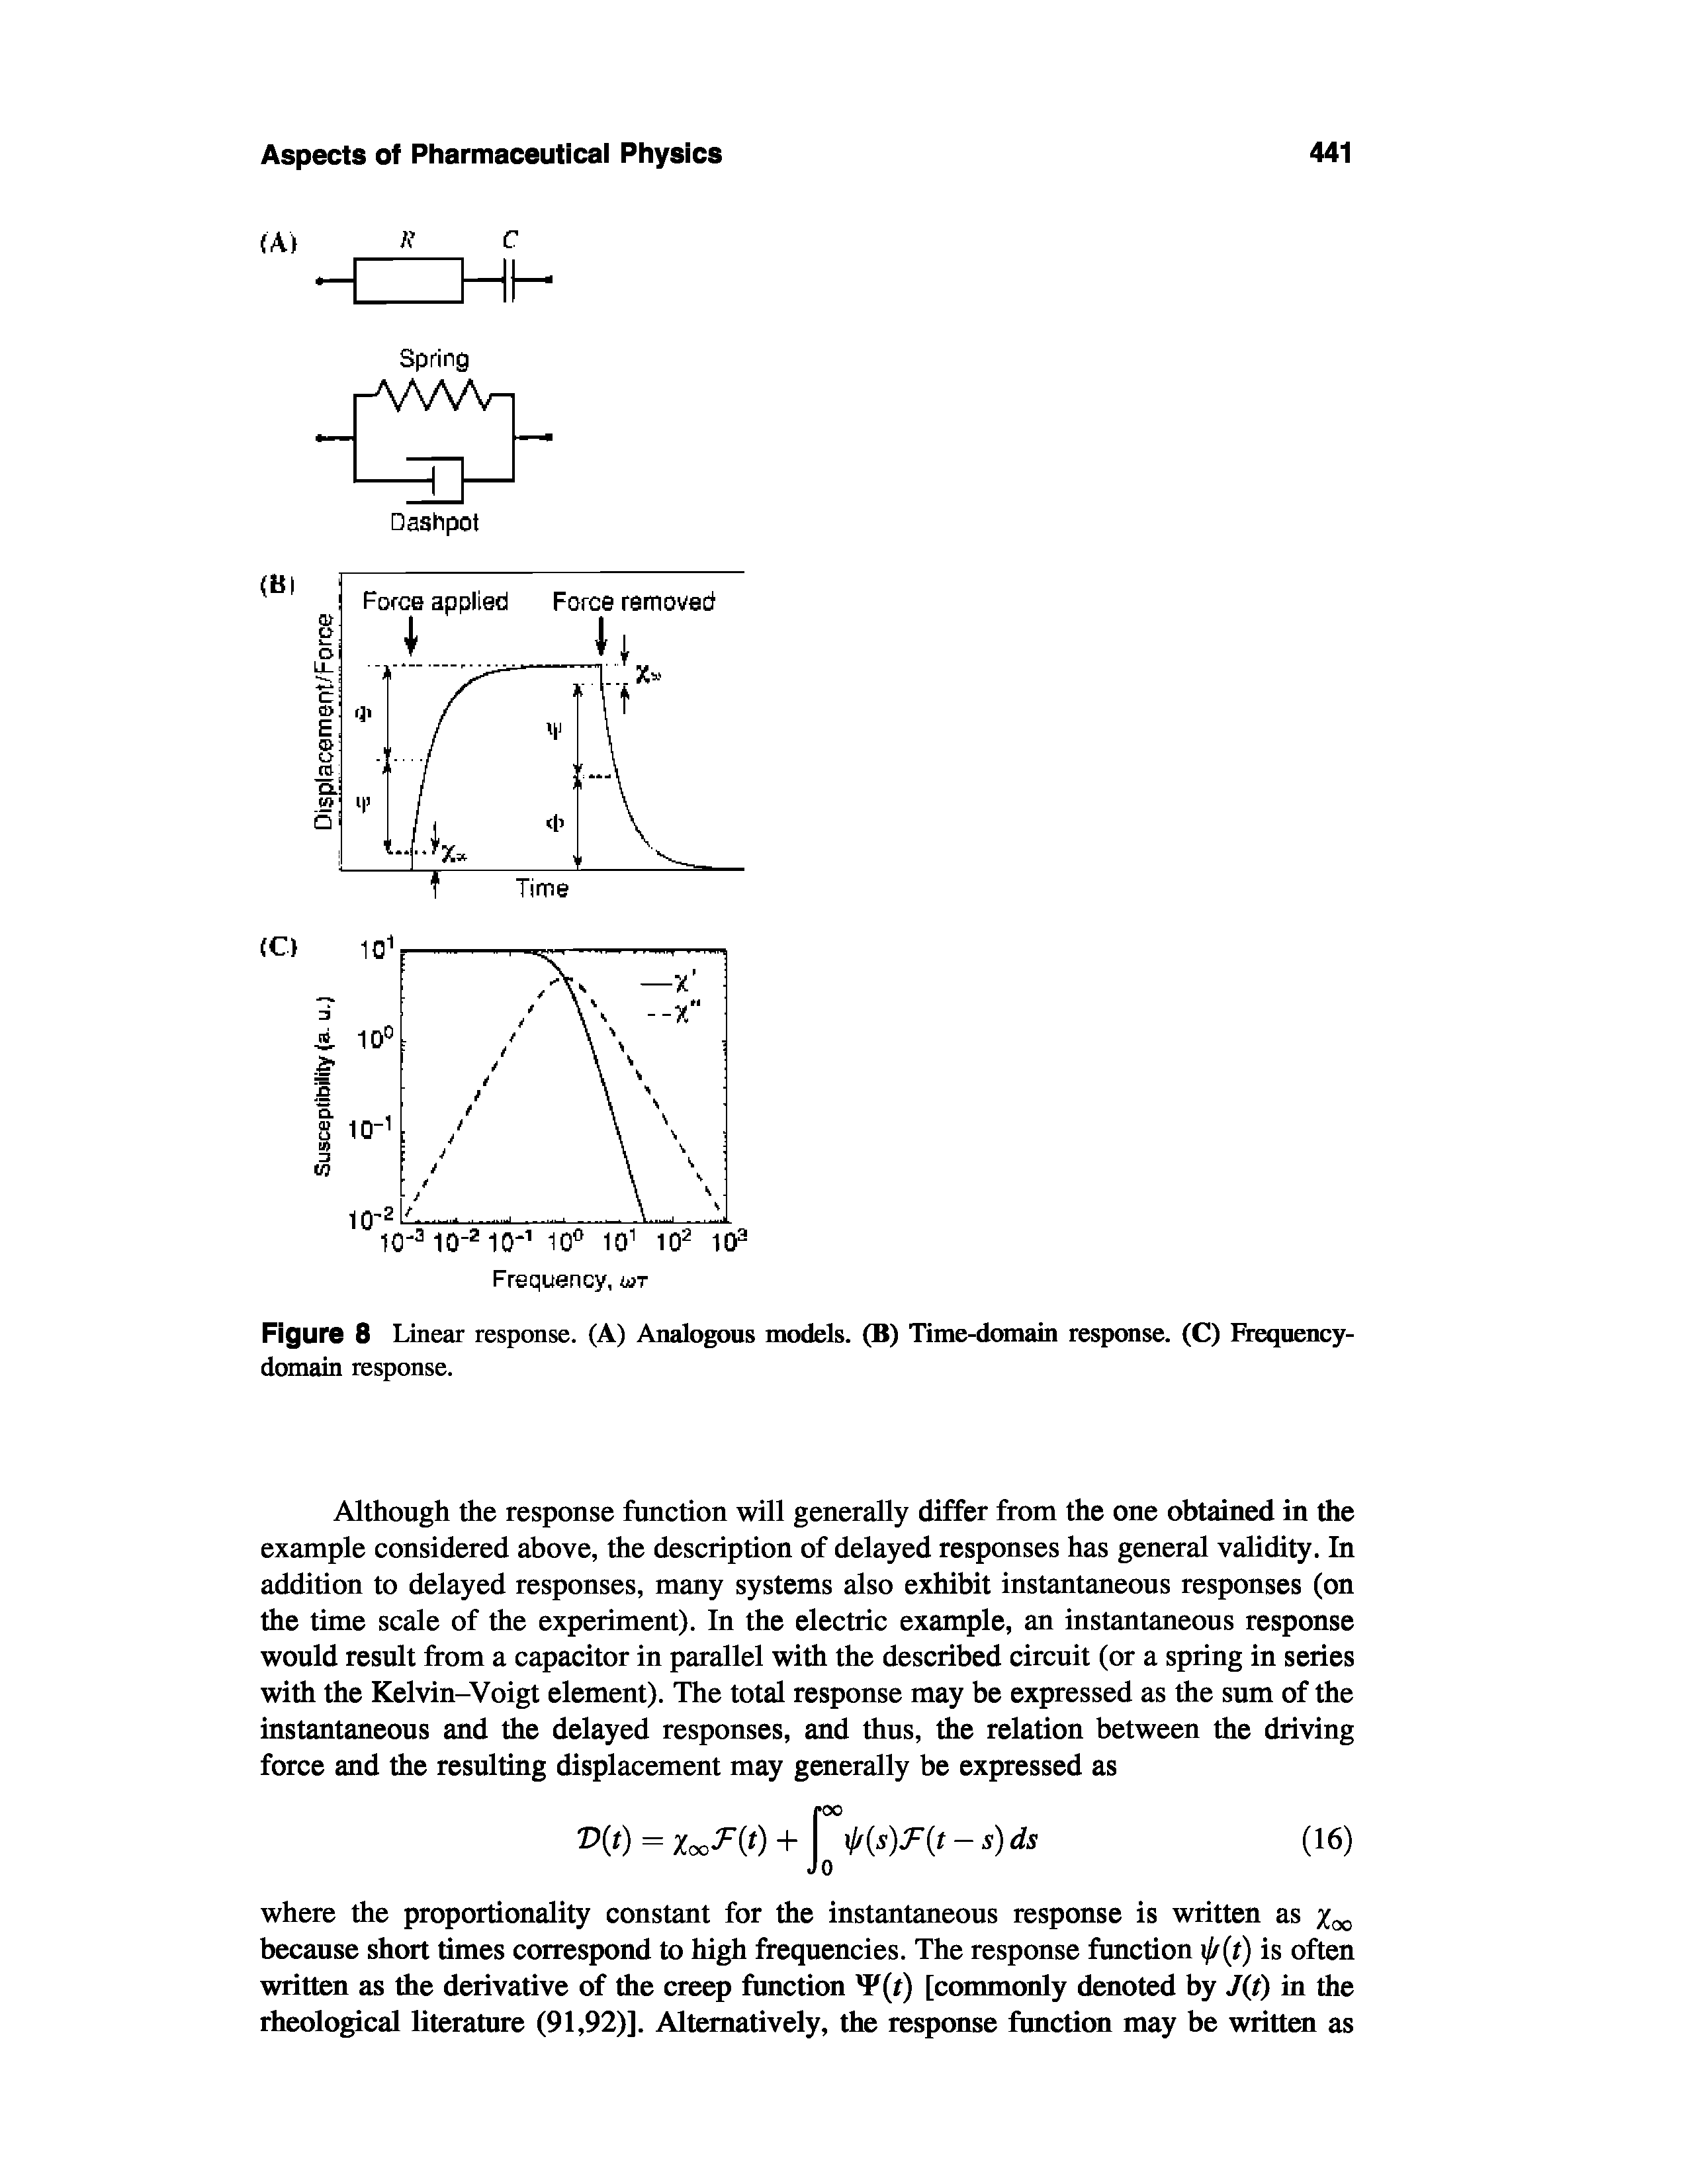 Figure 8 Linear response. (A) Analogous models. (B) Time-domain response. (C) Frequency-domain response.